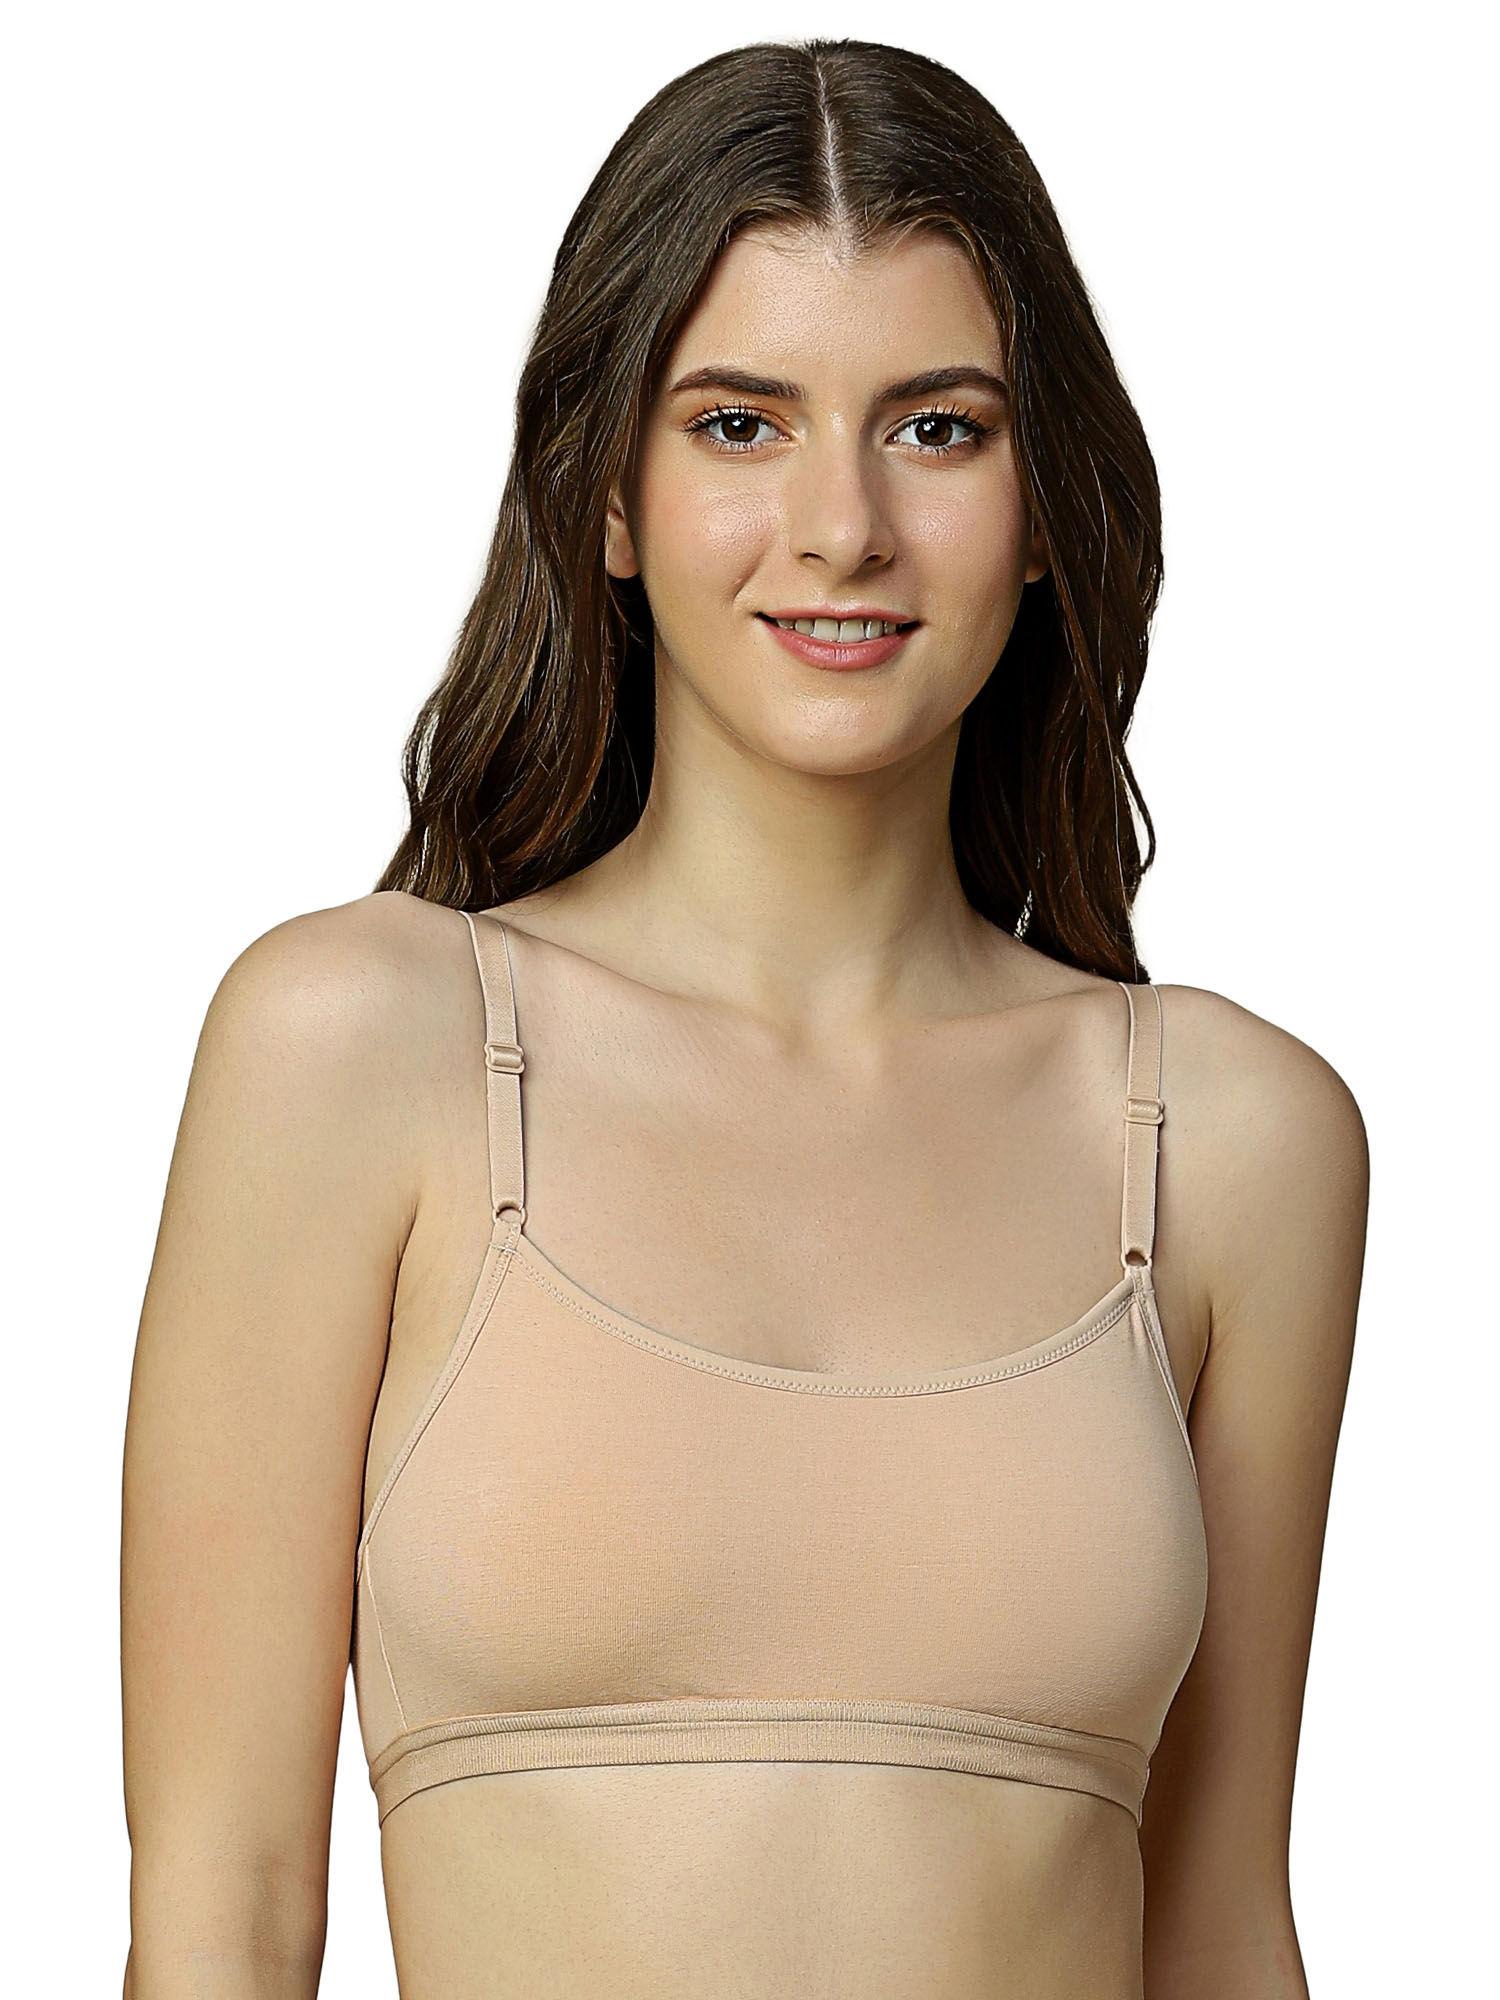 beginner bra 66 everyday wireless non padded full coverage cotton bra - nude